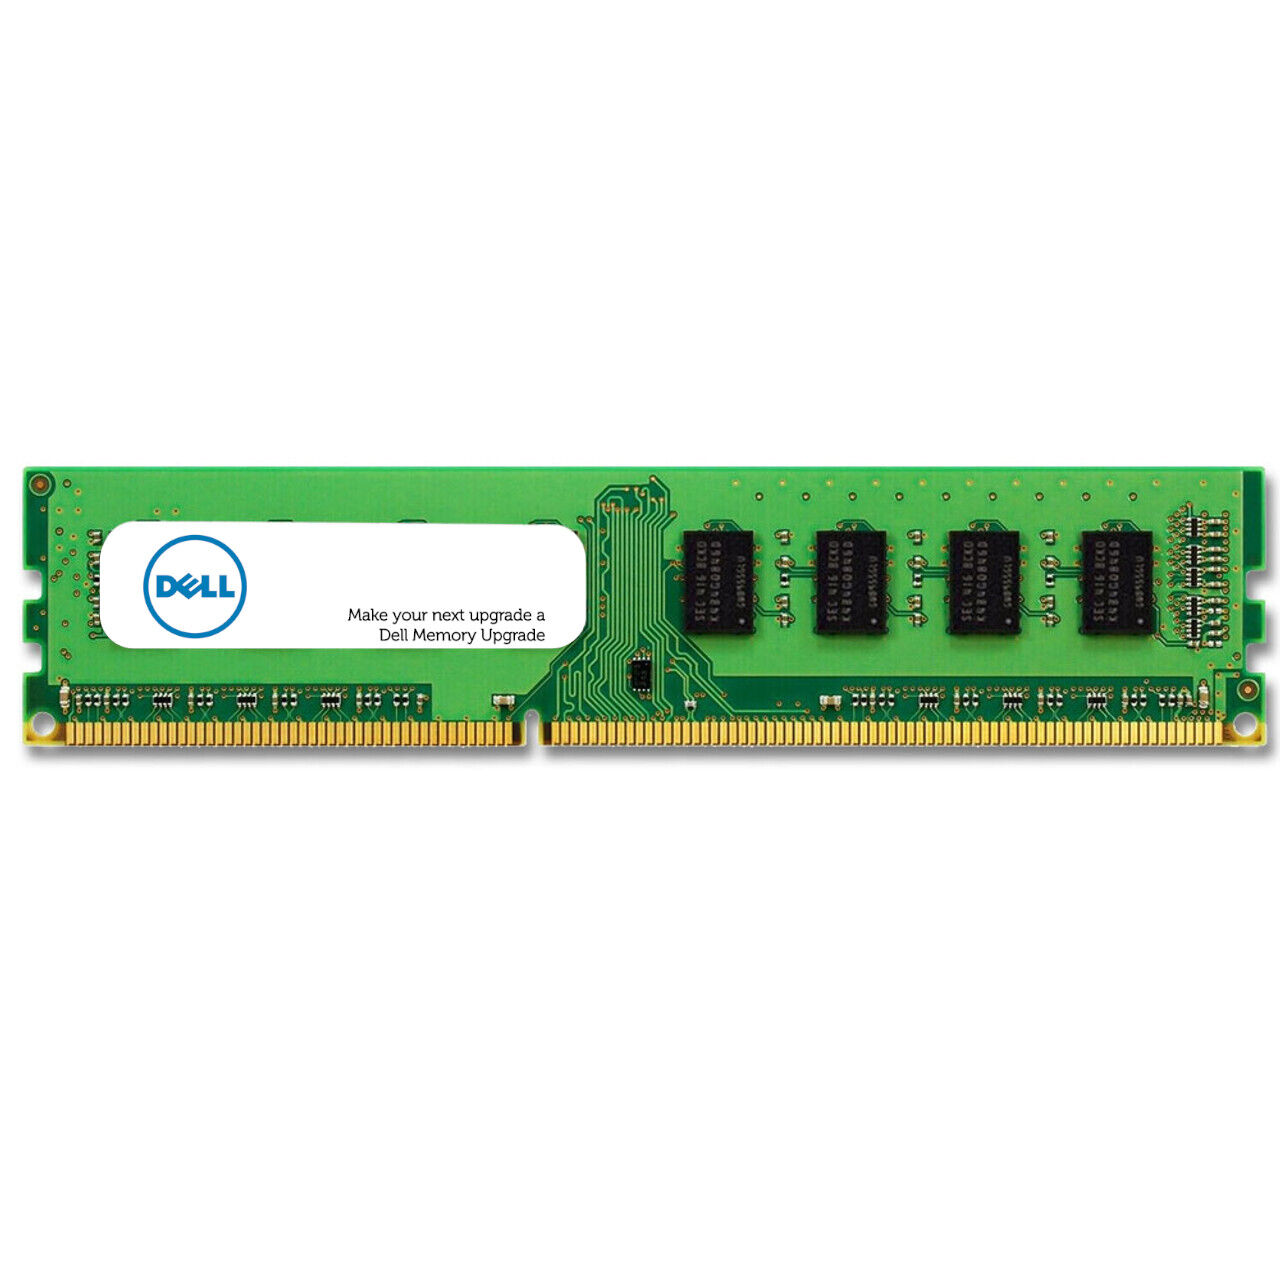 Dell Memory SNP66GKYC/8G A6994446 8GB 2Rx8 DDR3 UDIMM 1600MHz RAM